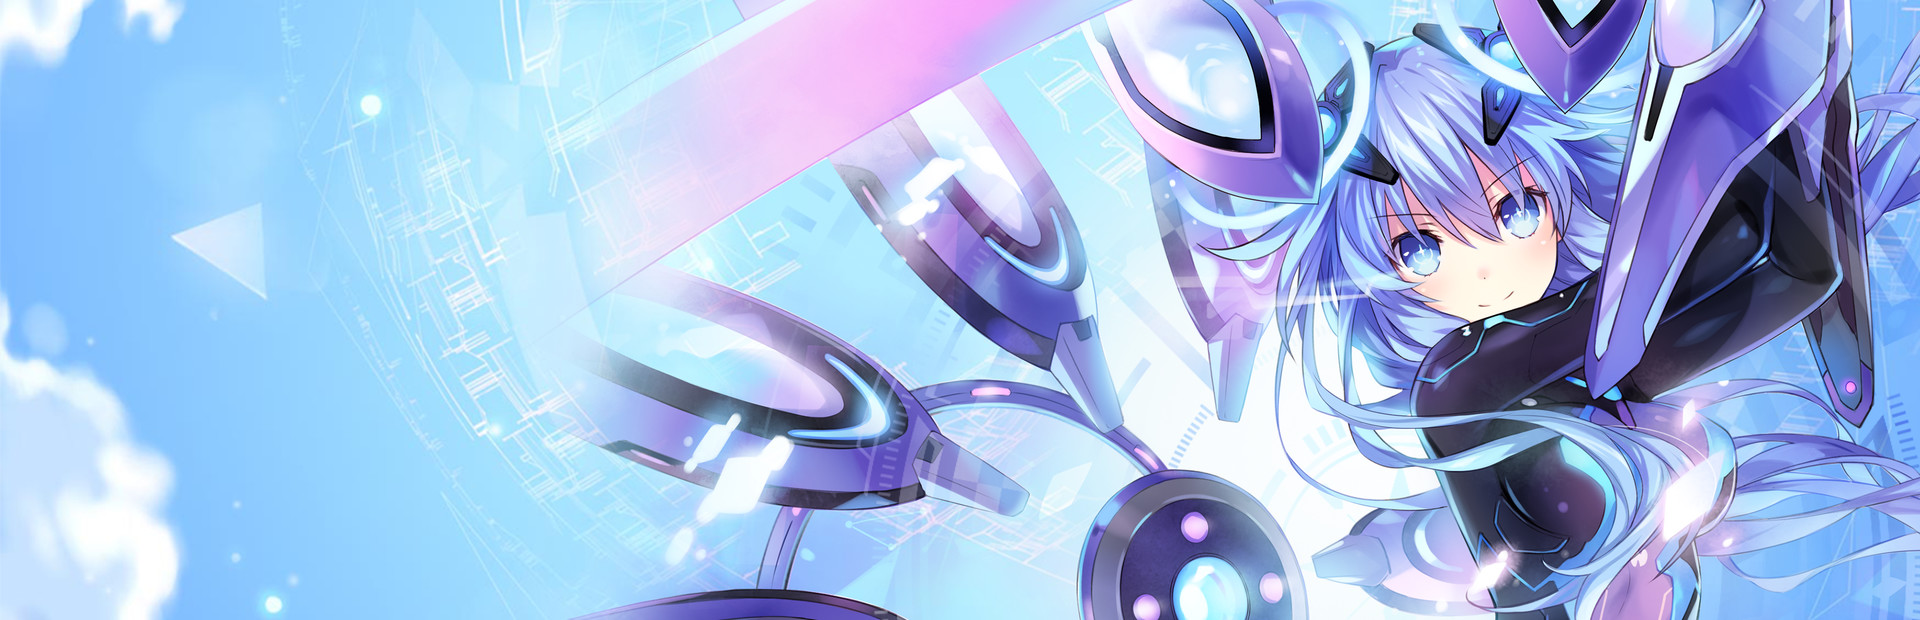 Megadimension Neptunia VIIR cover image